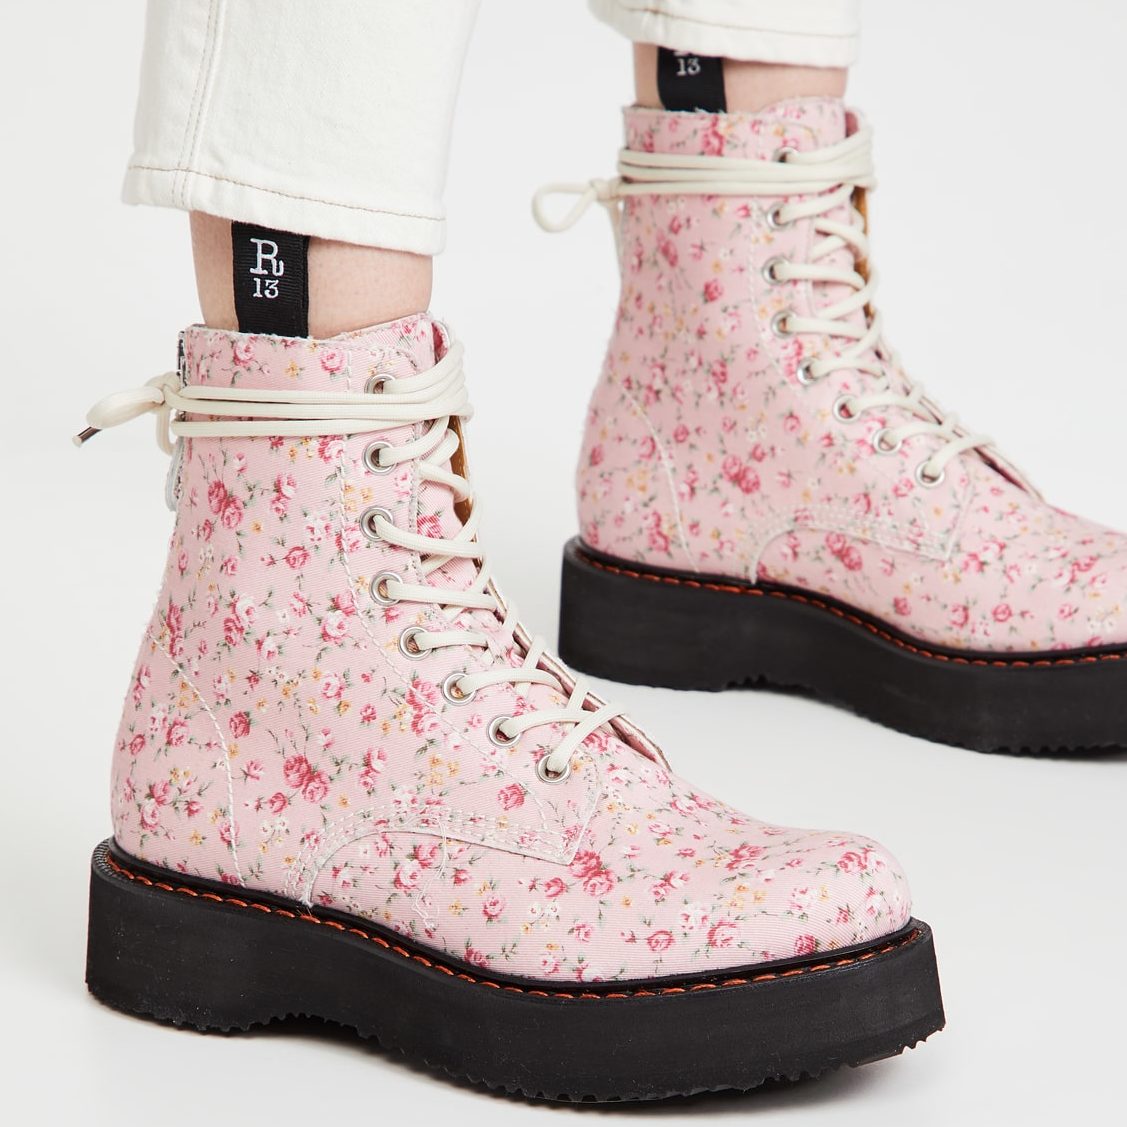 Pink Floral Platform Combat Boots, by R13